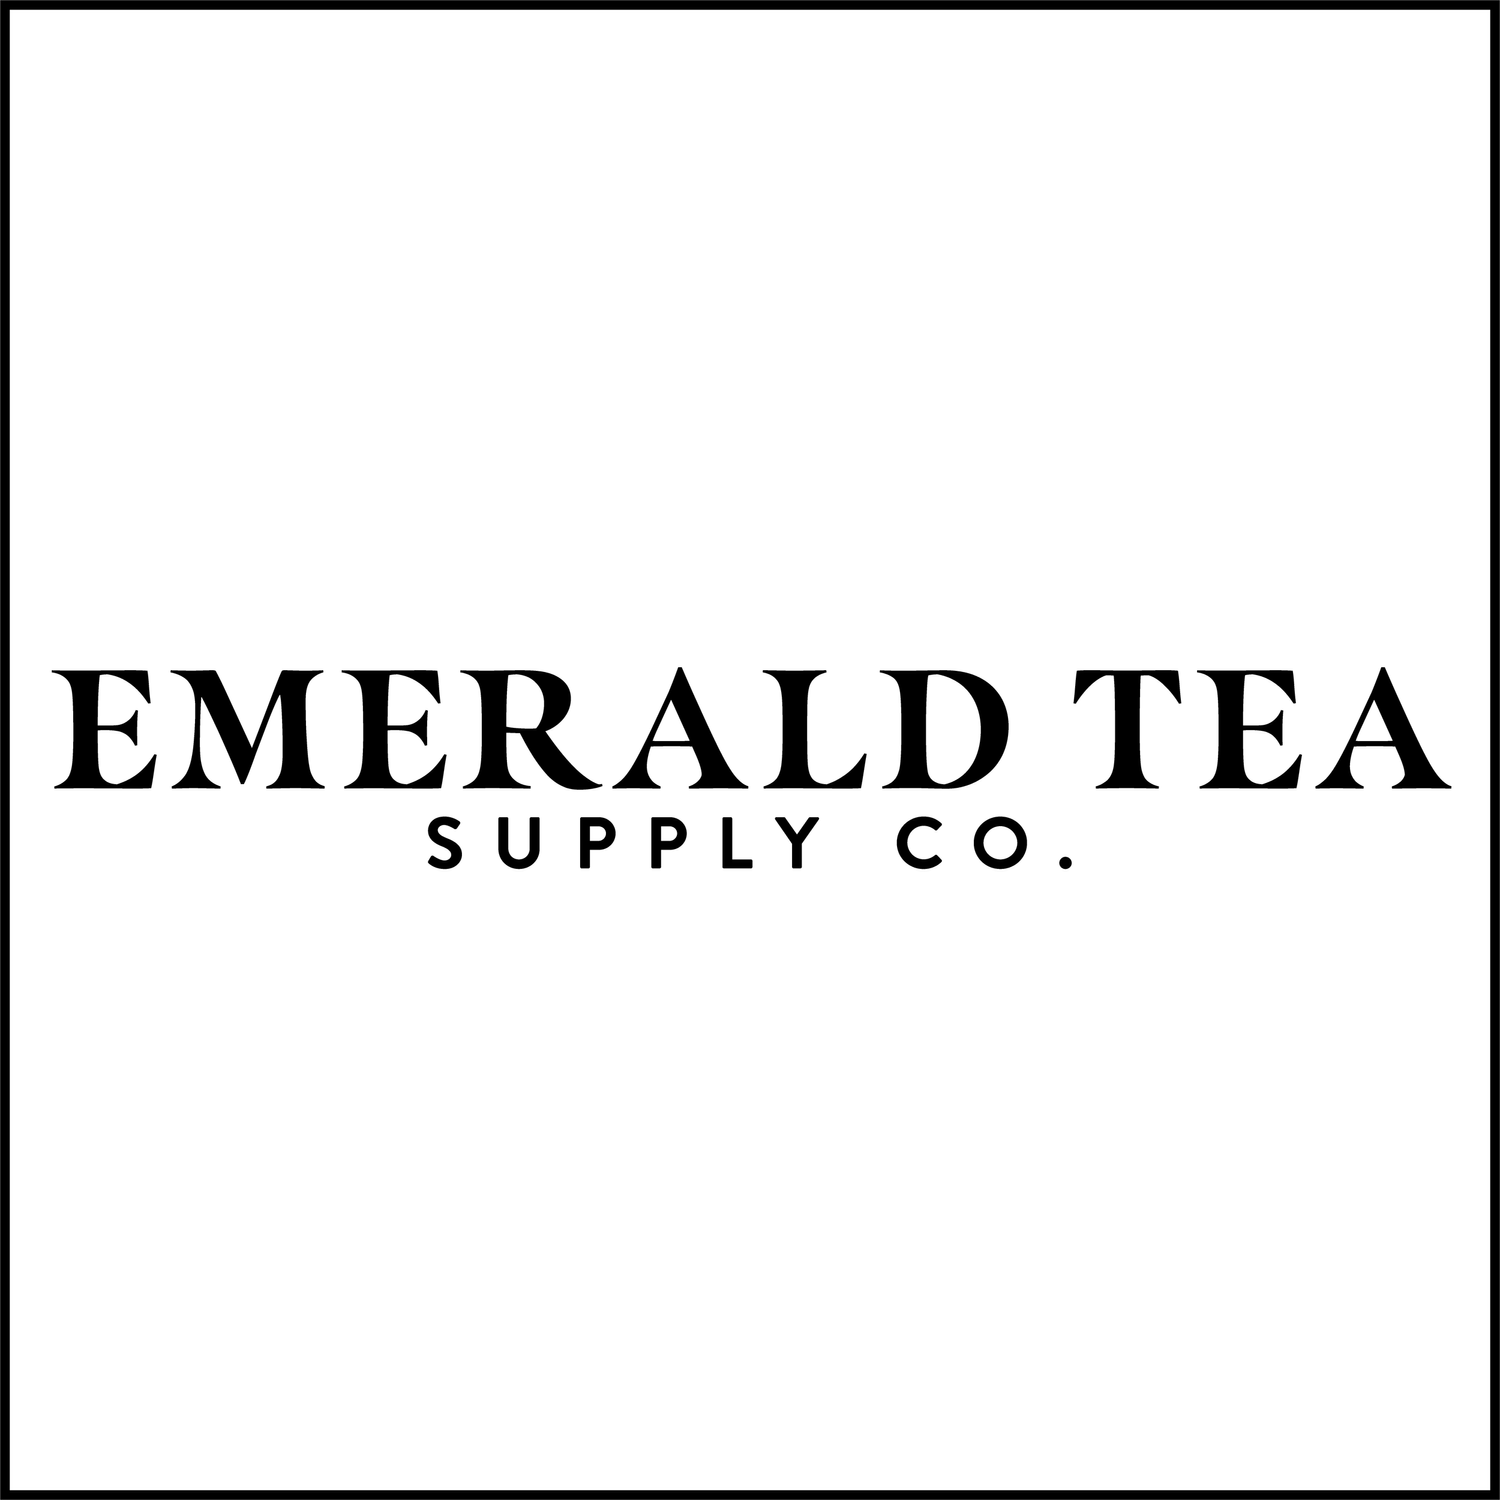 Welcome to Emerald Tea Supply Company